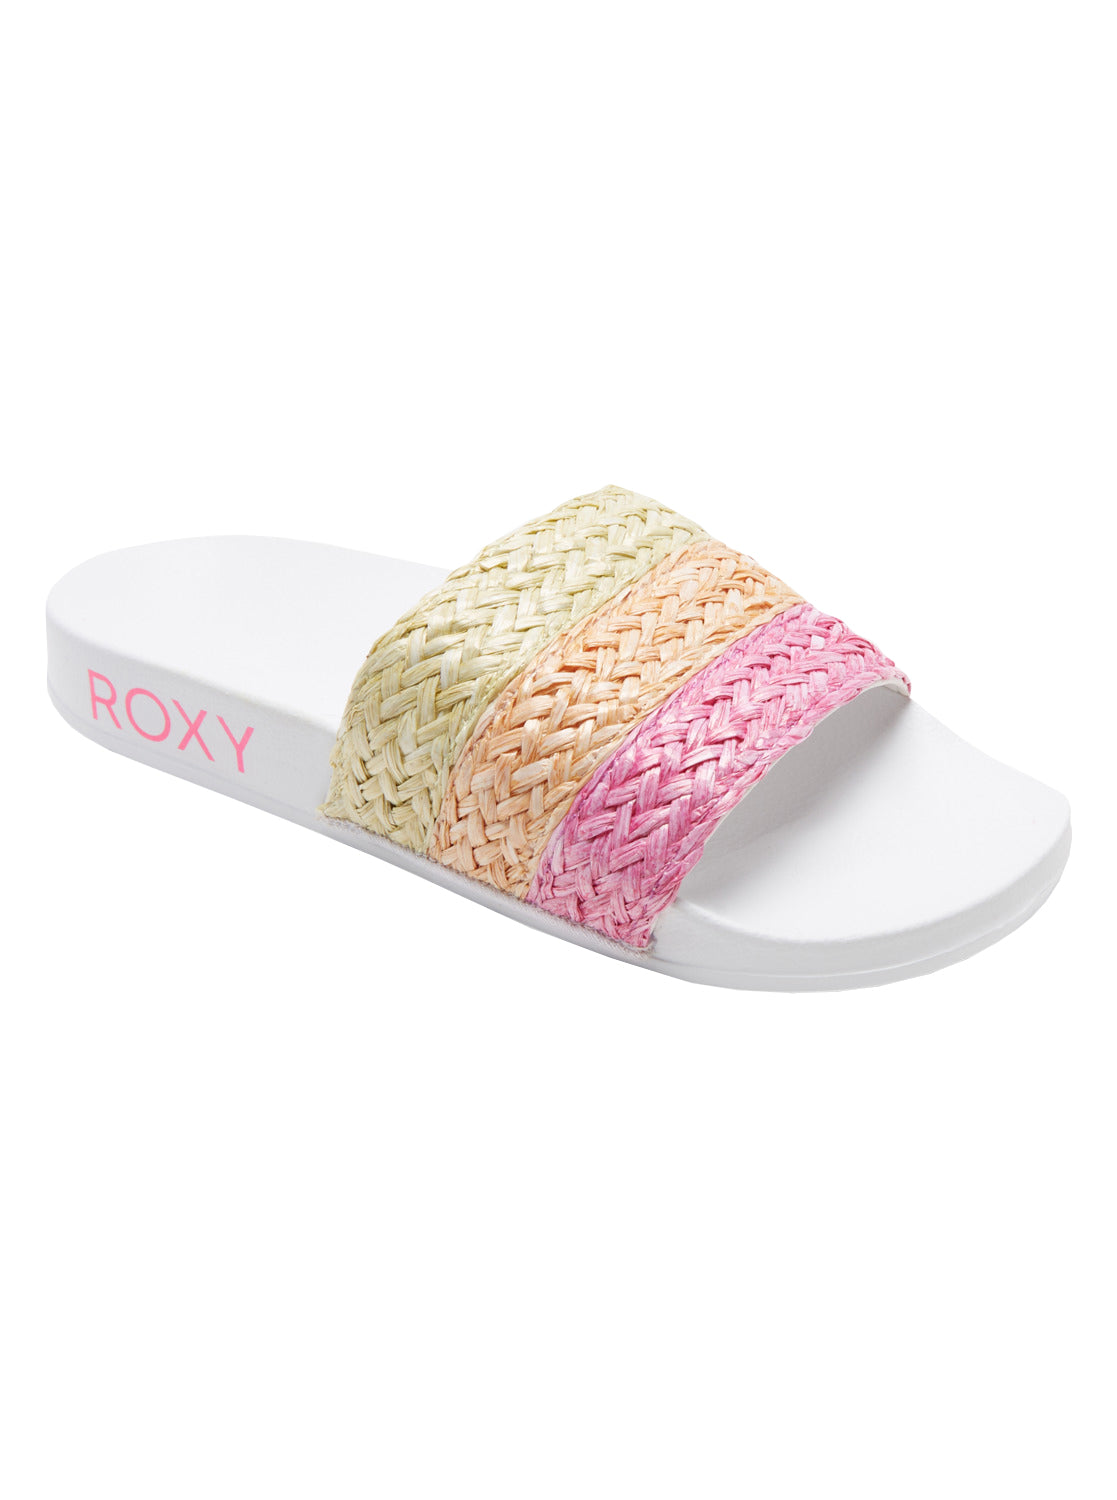 Roxy Slippy Jute Womens Sandal TPO-White-Crazy Pink-Orange 8